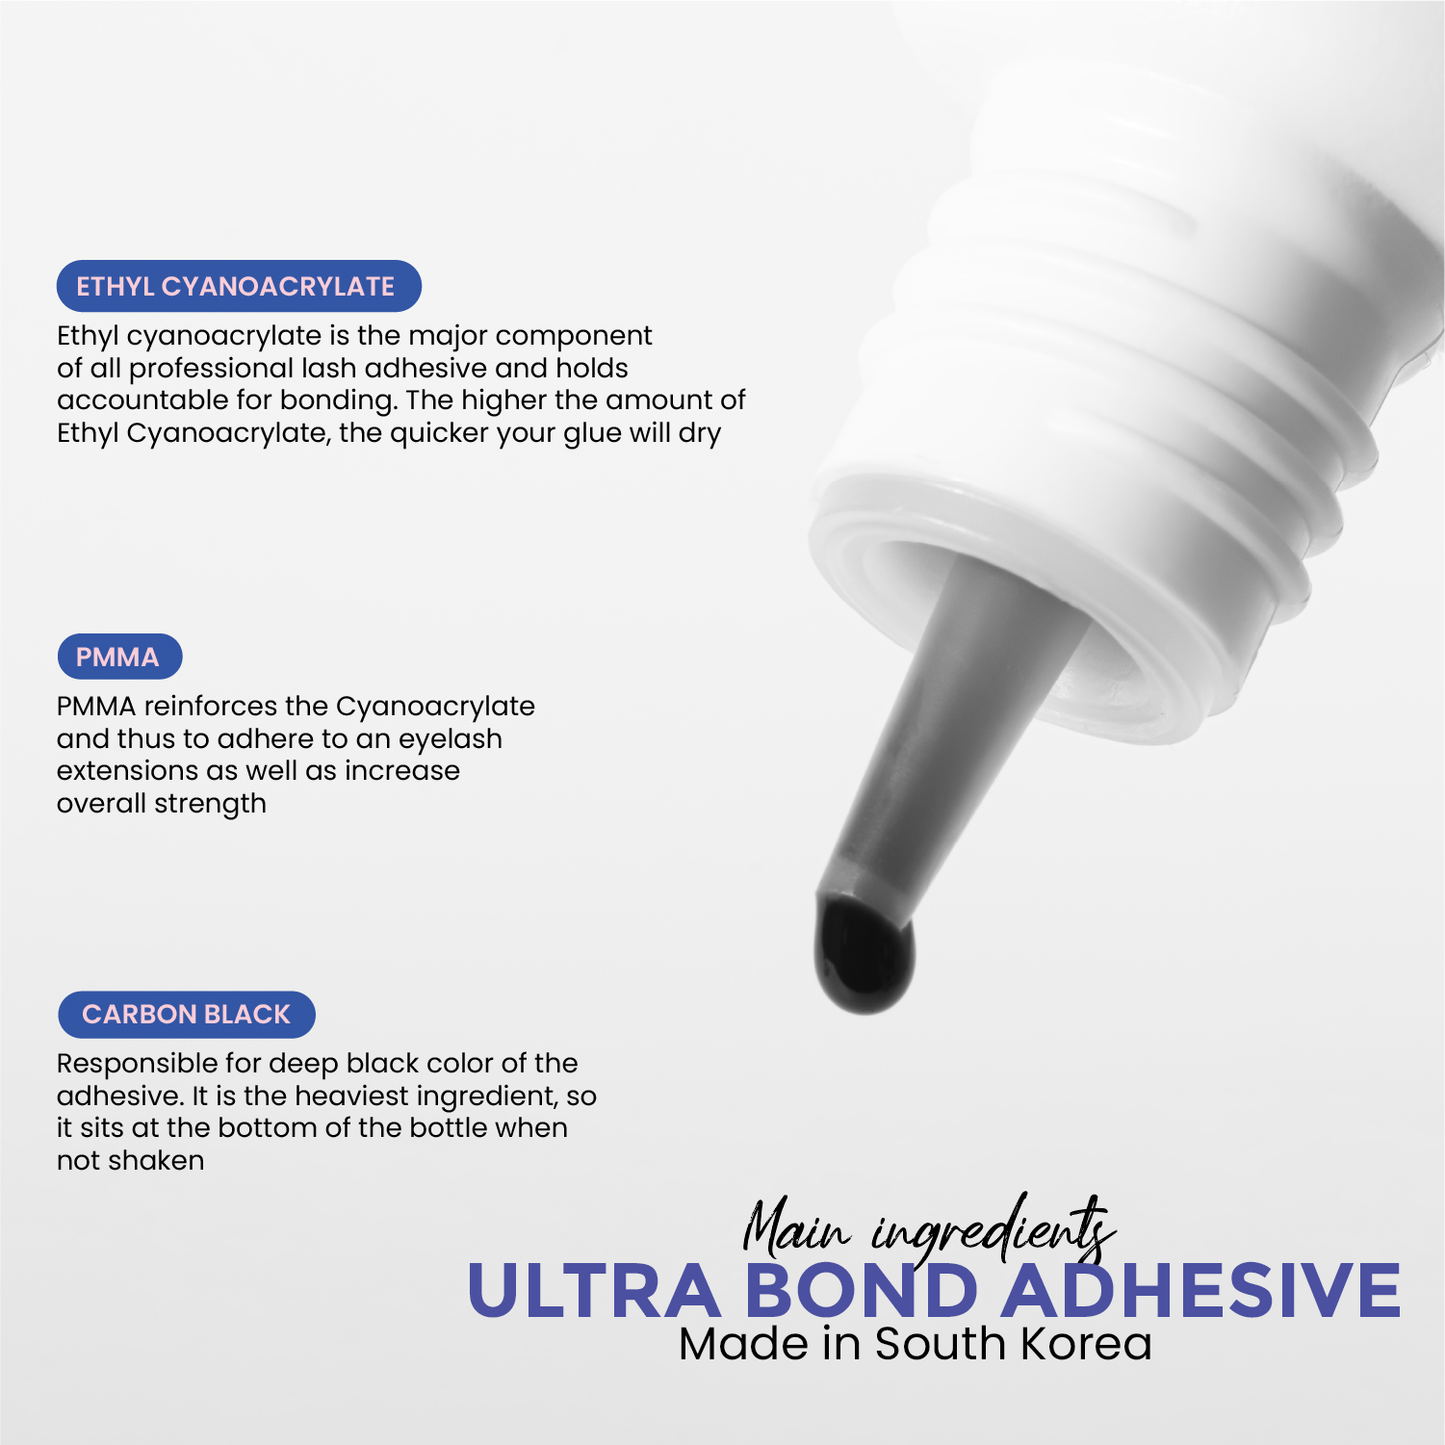 Ultra Bond adhesive ingredients